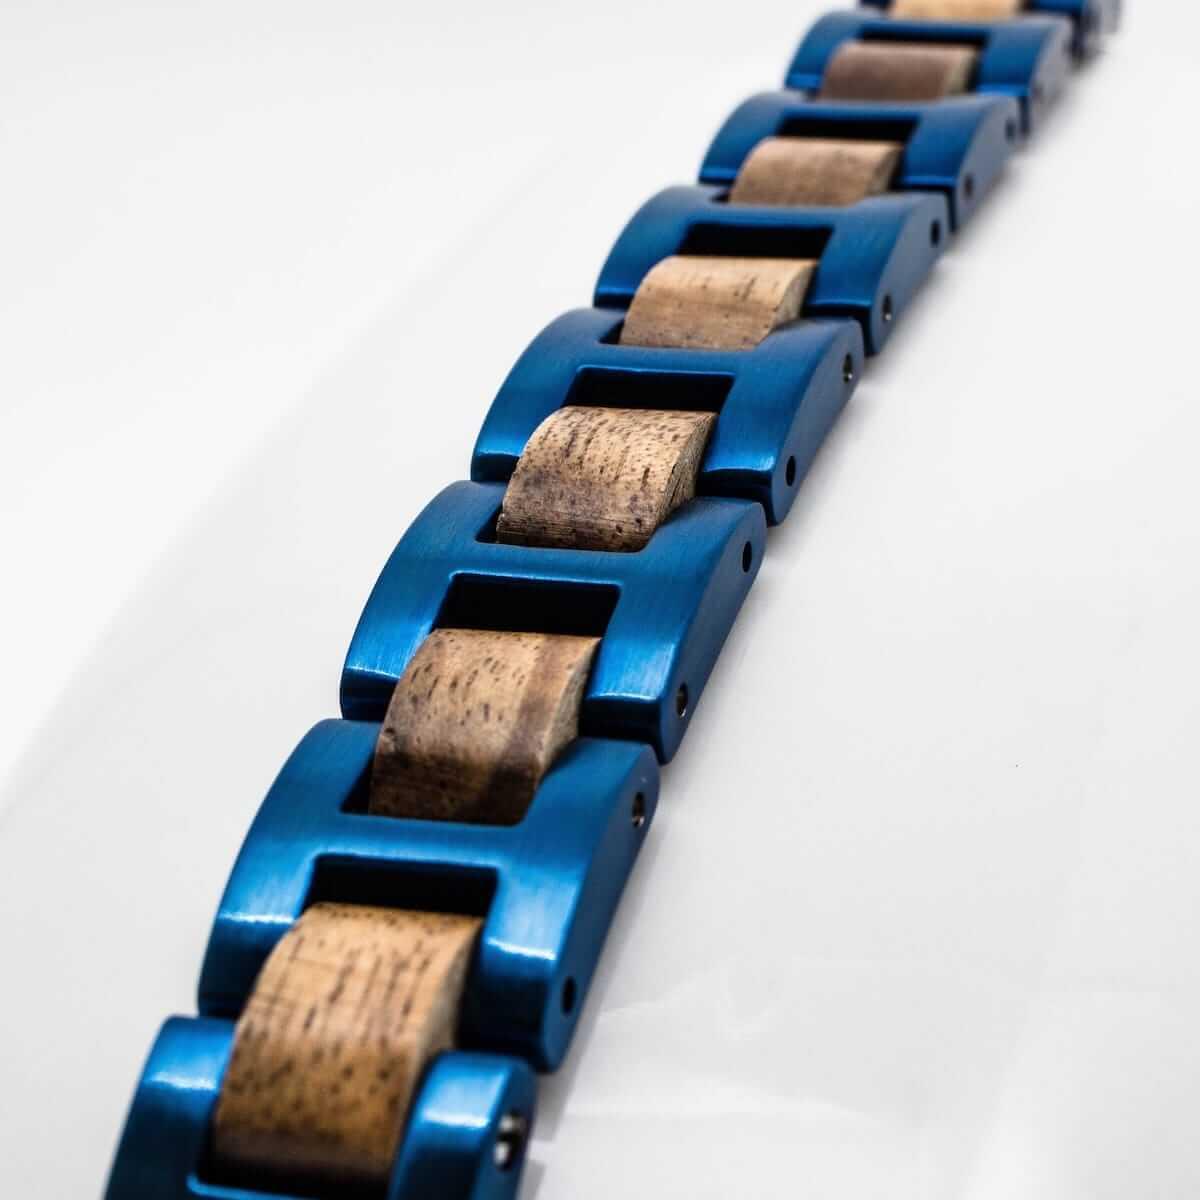 HOLZKERN Armband Acoustic Marmorholz Blau